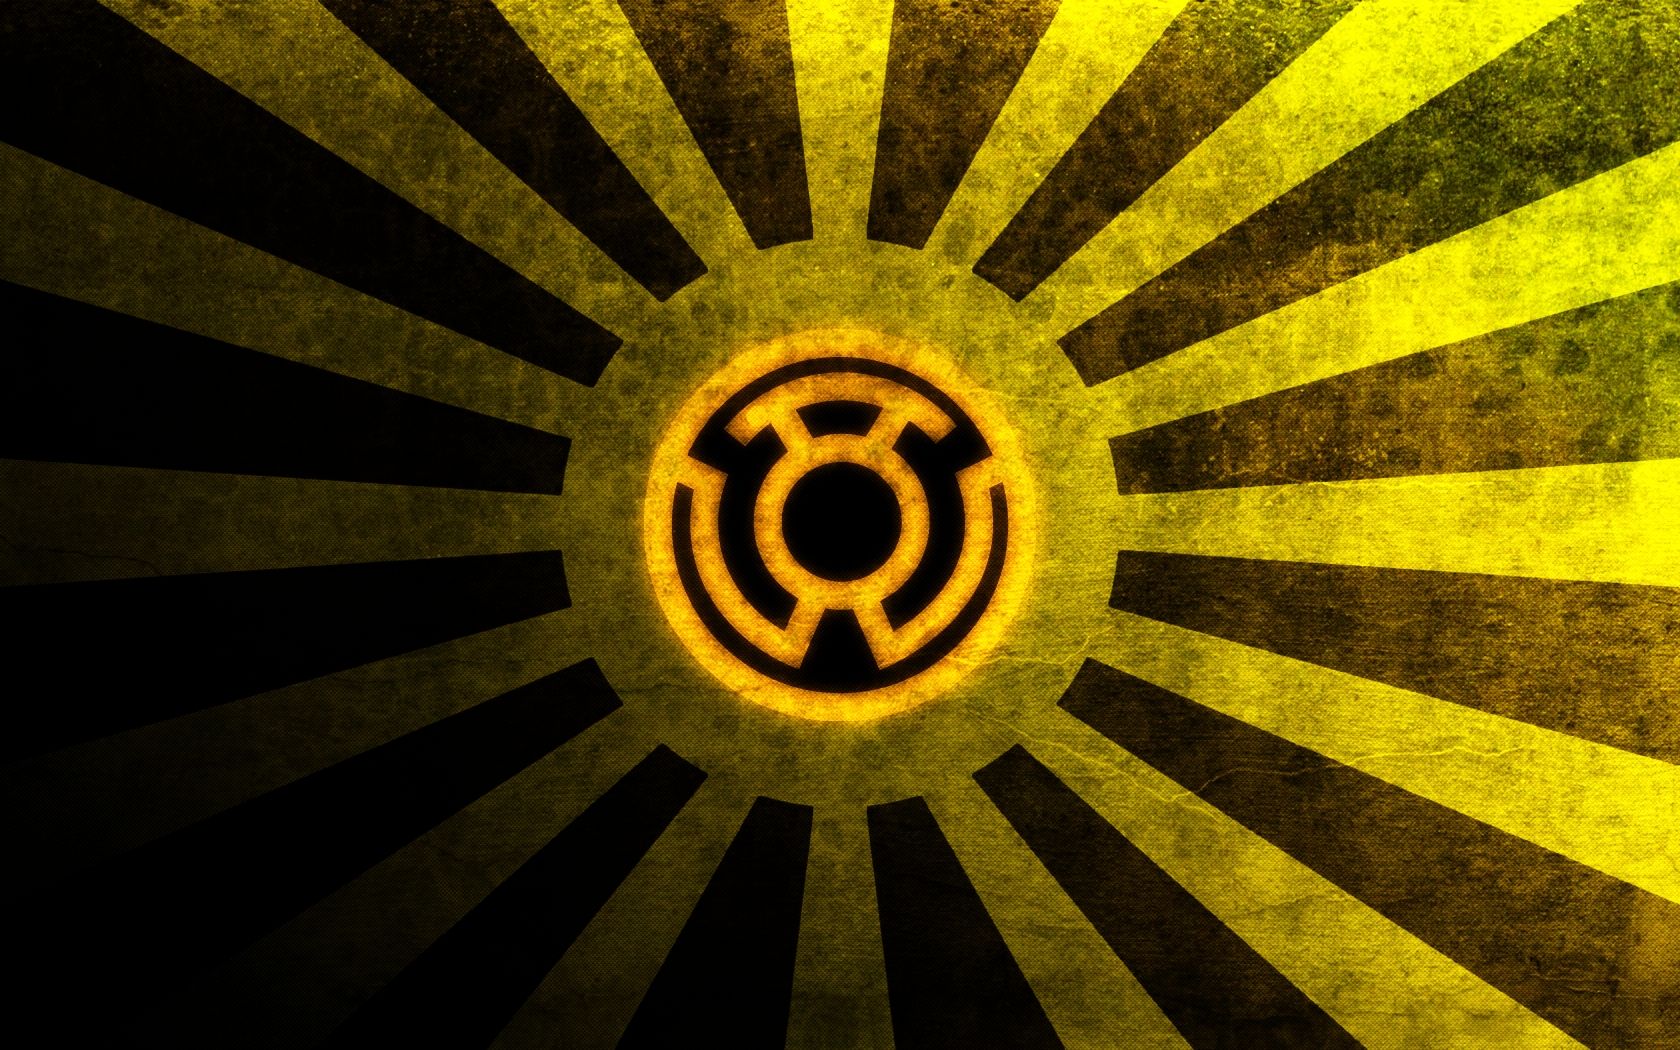 Sinestro Corps Background. Marine Corps